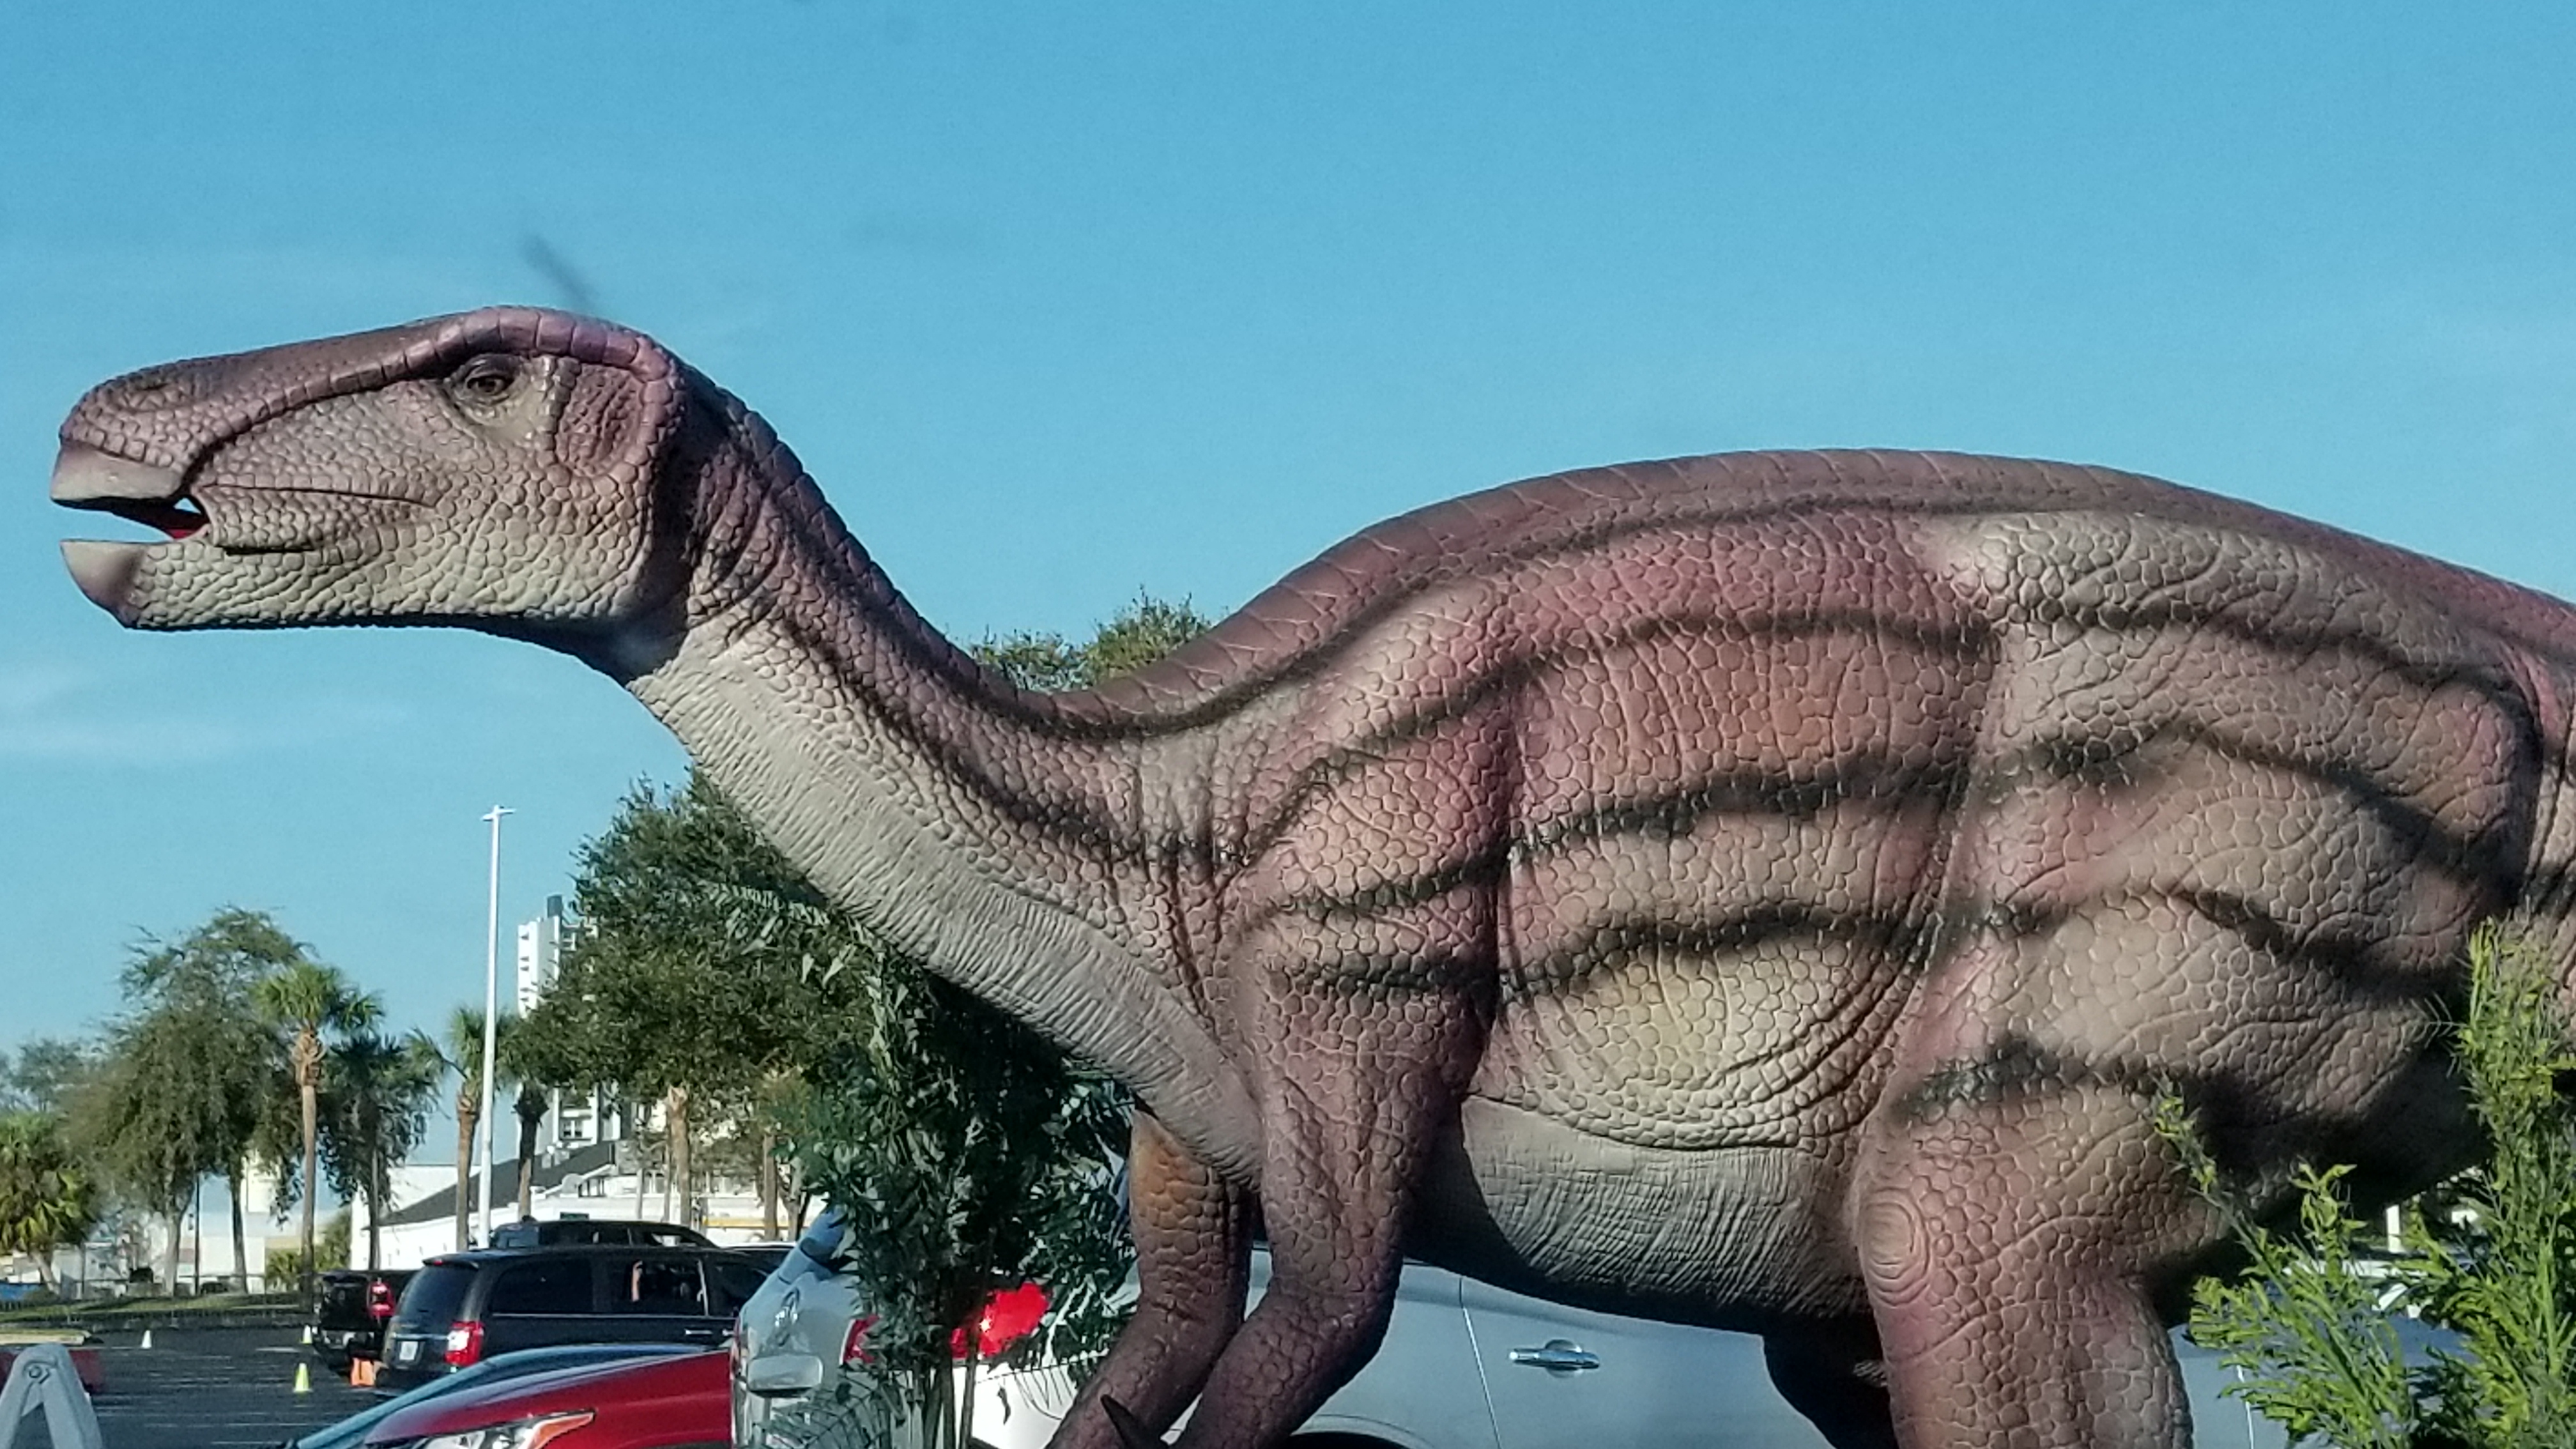 Jurassic Quest is Roaring into Tampa! Macaroni KID Winter HavenDavenport